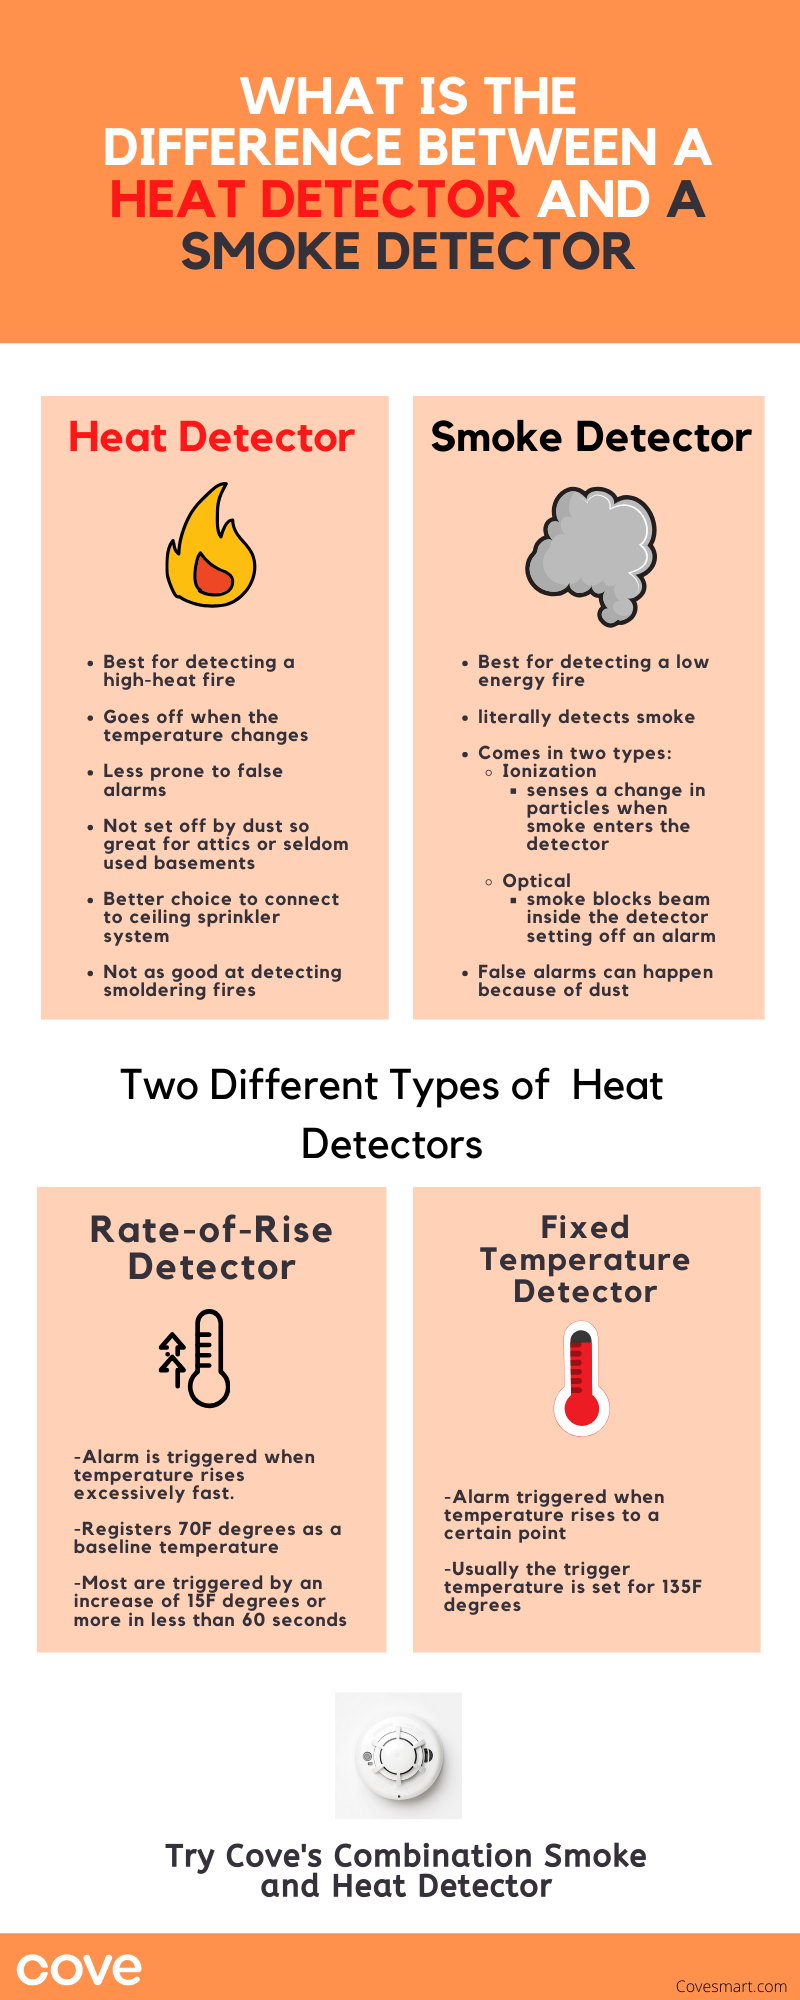 ¿A qué temperatura se dispara un detector de calor?